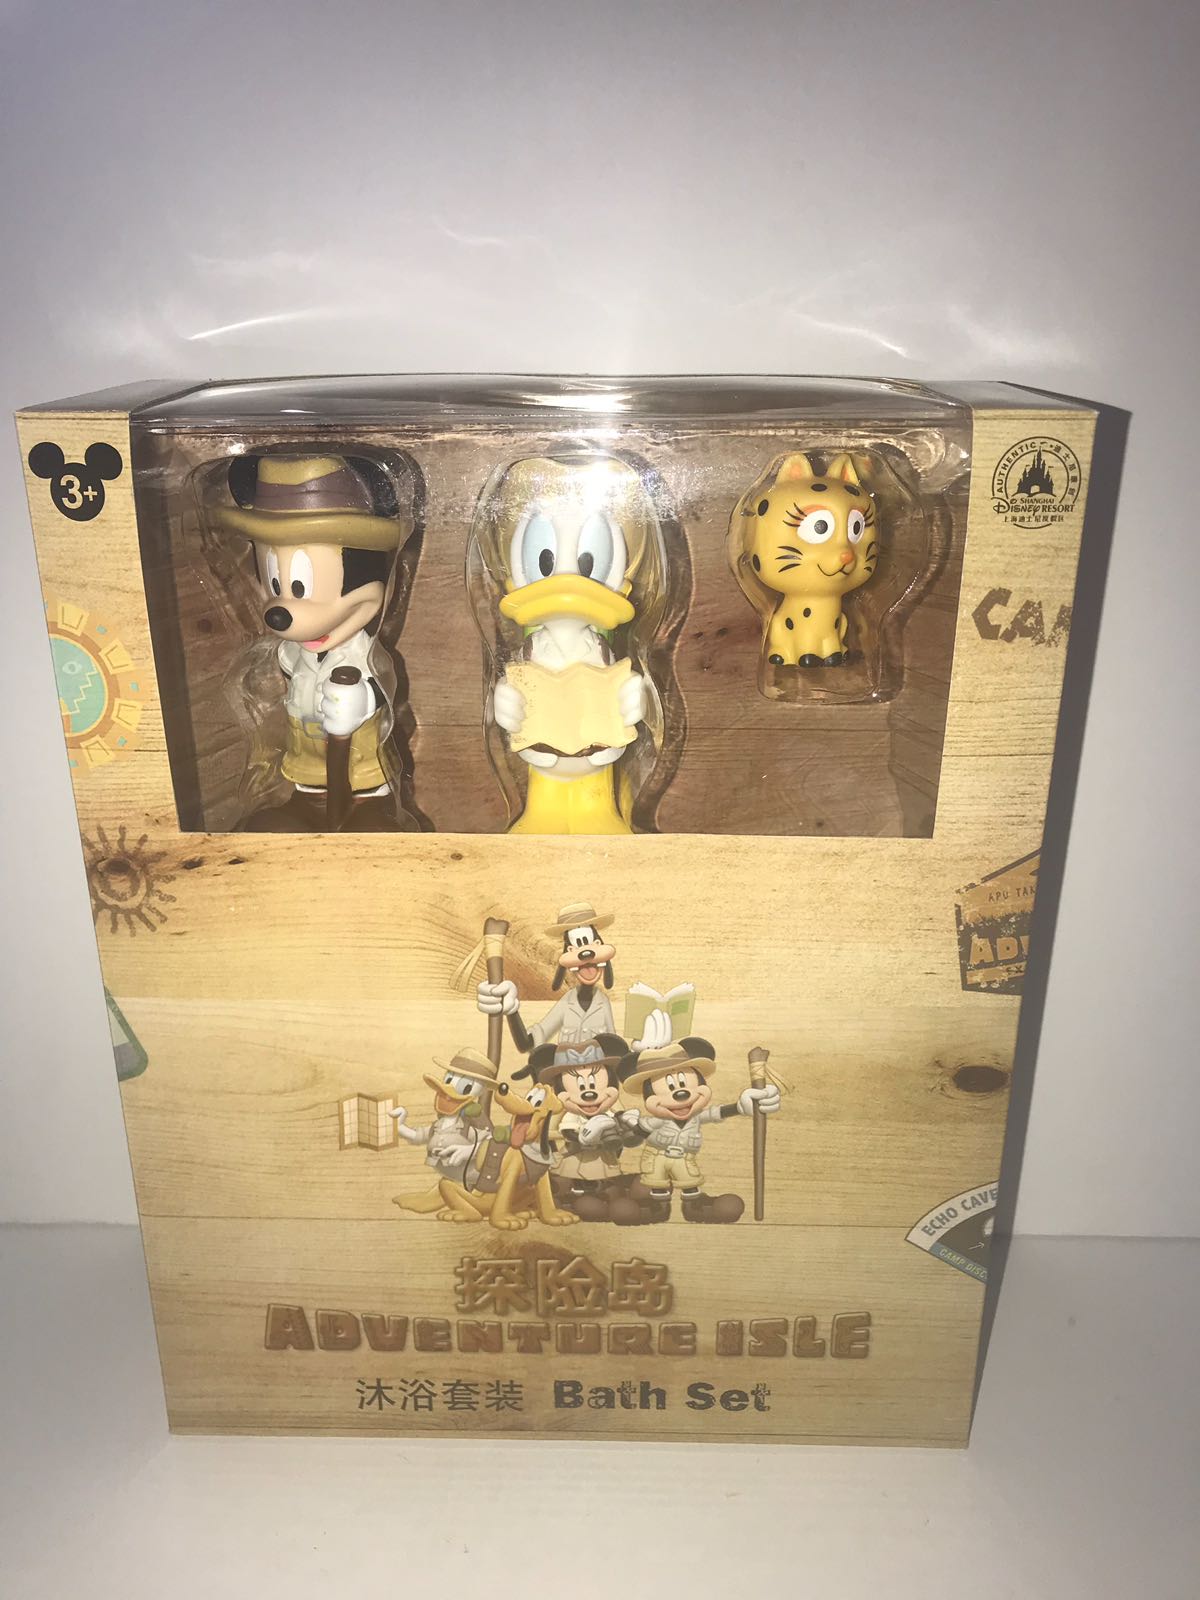 Disney Parks Shanghai Adventure Isle Mickey & Friends Bath Toys Set New with Box